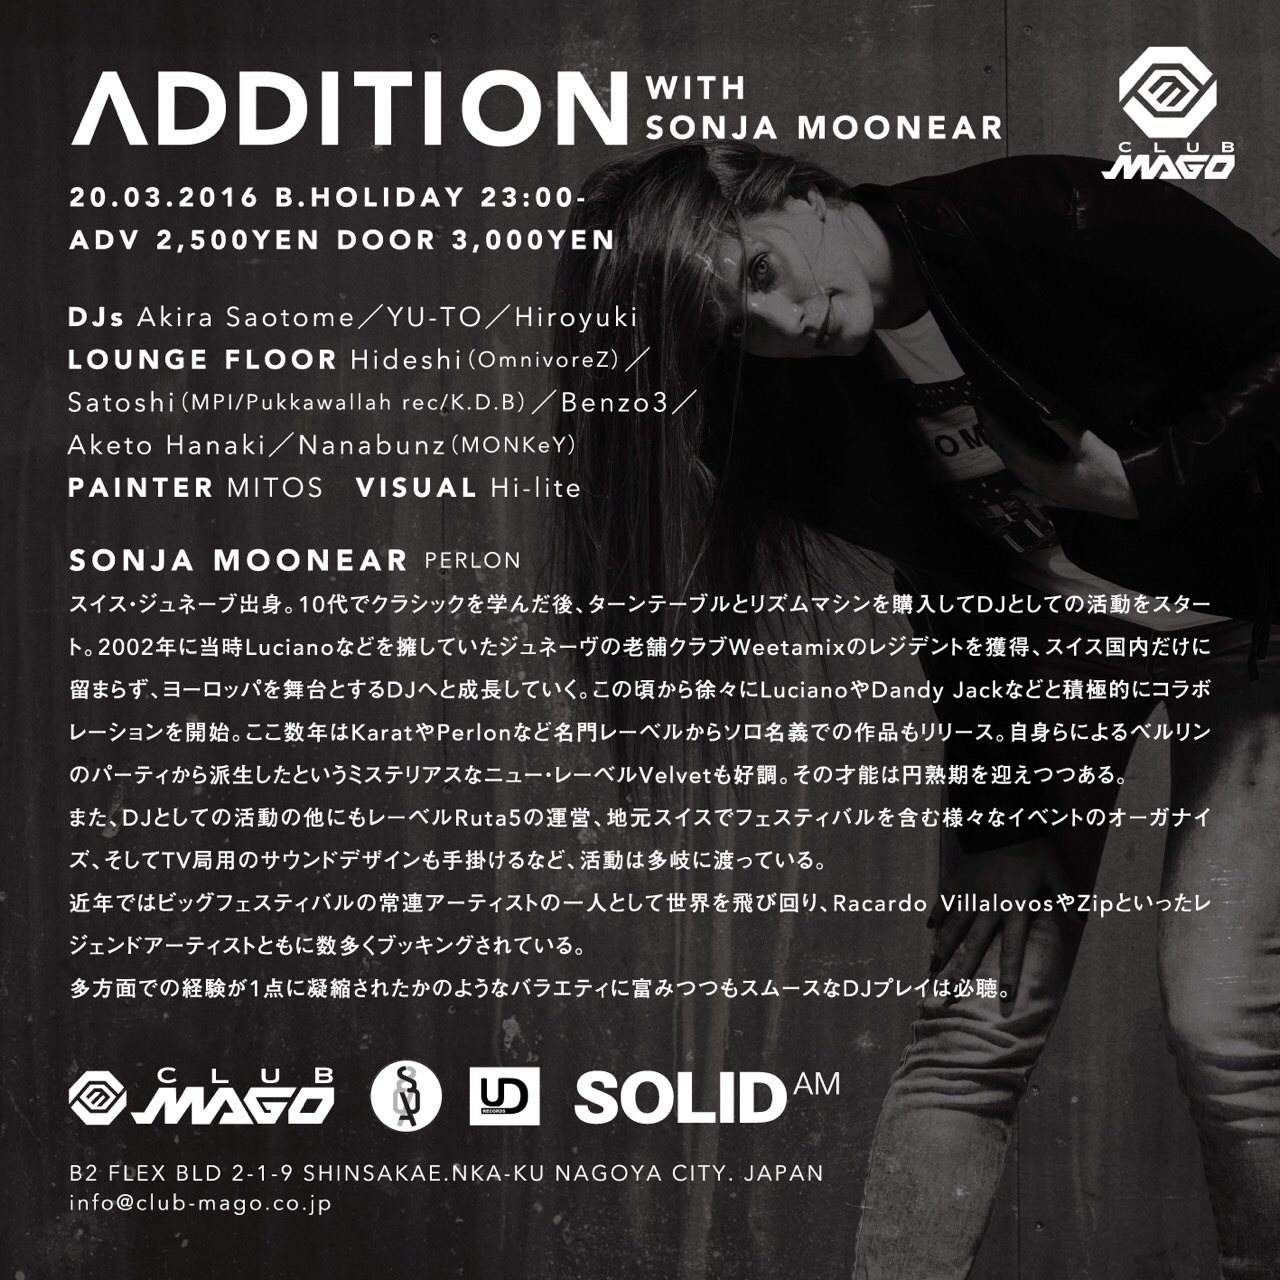 Addition with Sonja Moonear - フライヤー裏